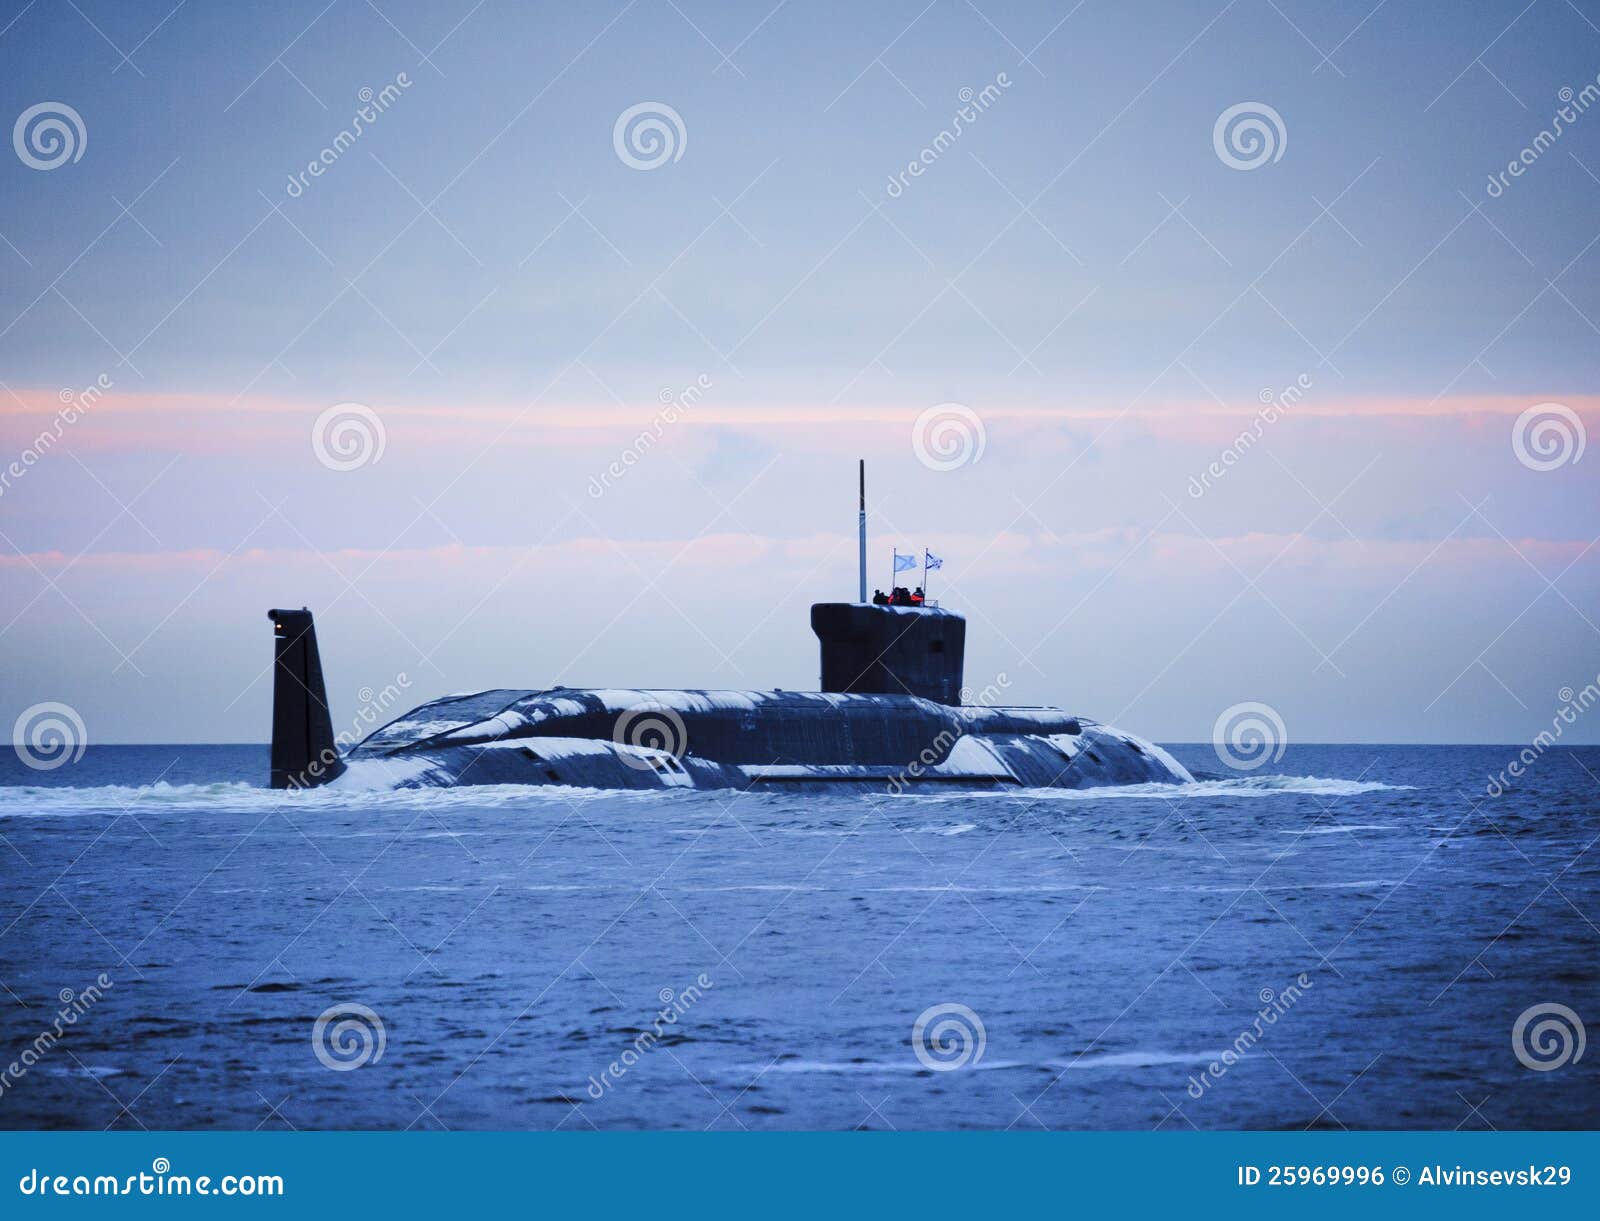 russian nuclear submarine